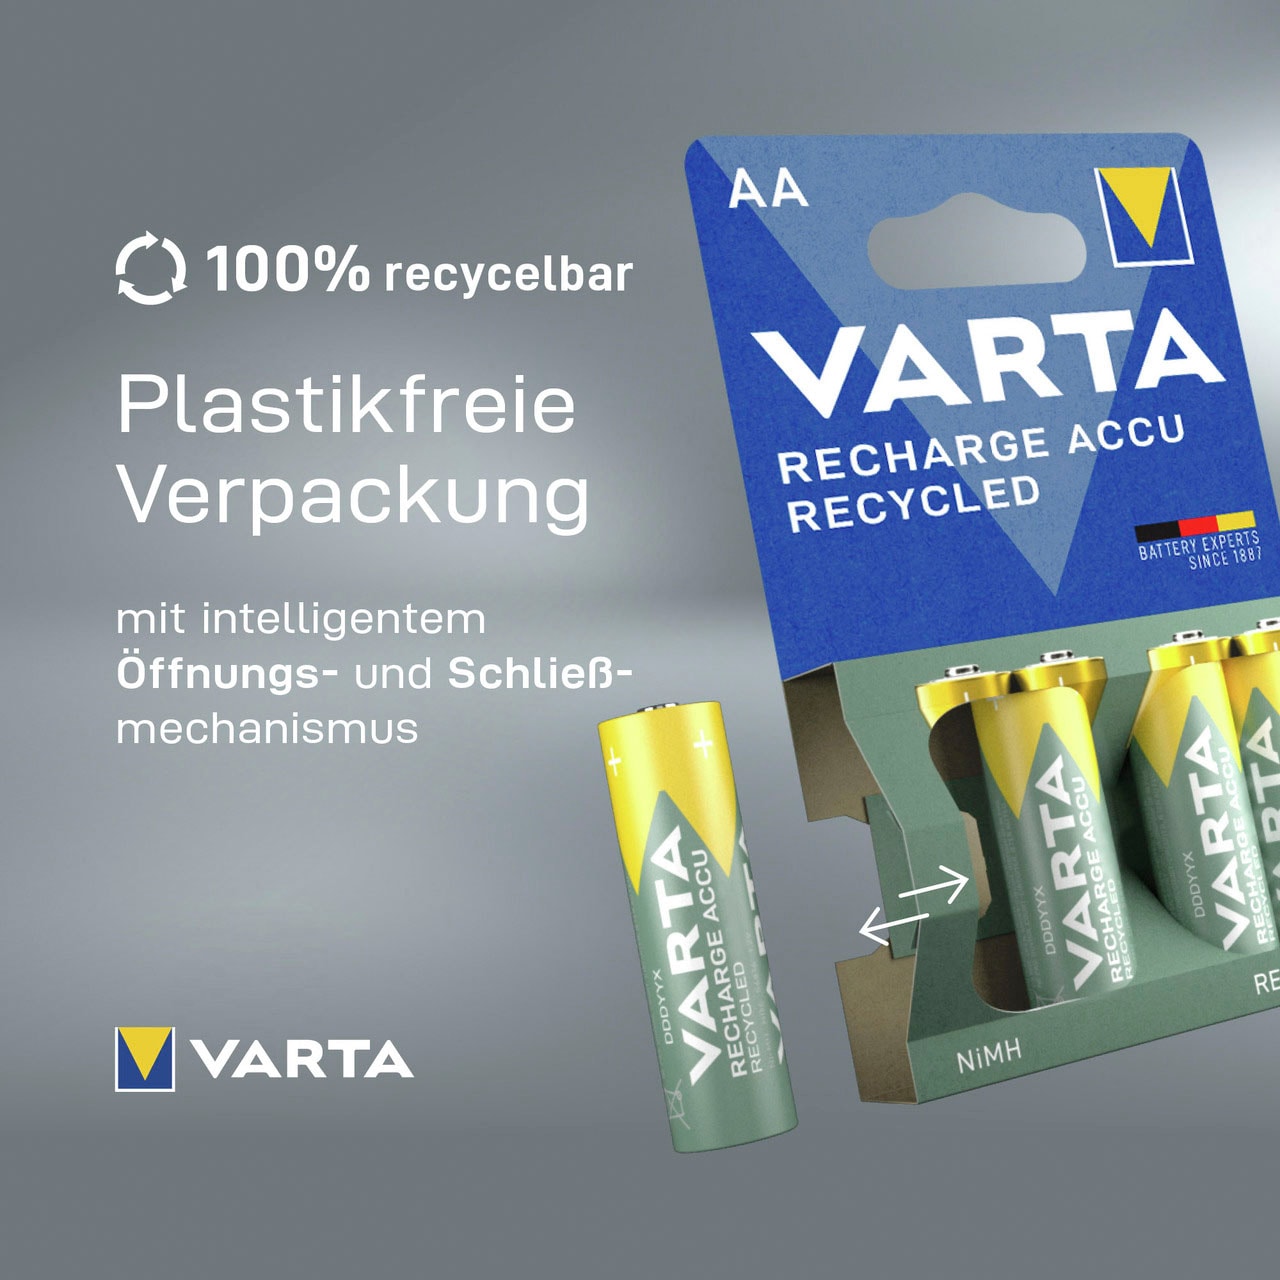 (Packung, wiederaufladbare Akkus«, 1,2 Batterien St.), VARTA VARTA 4 Recharge V, Accu »wiederauflaudbare